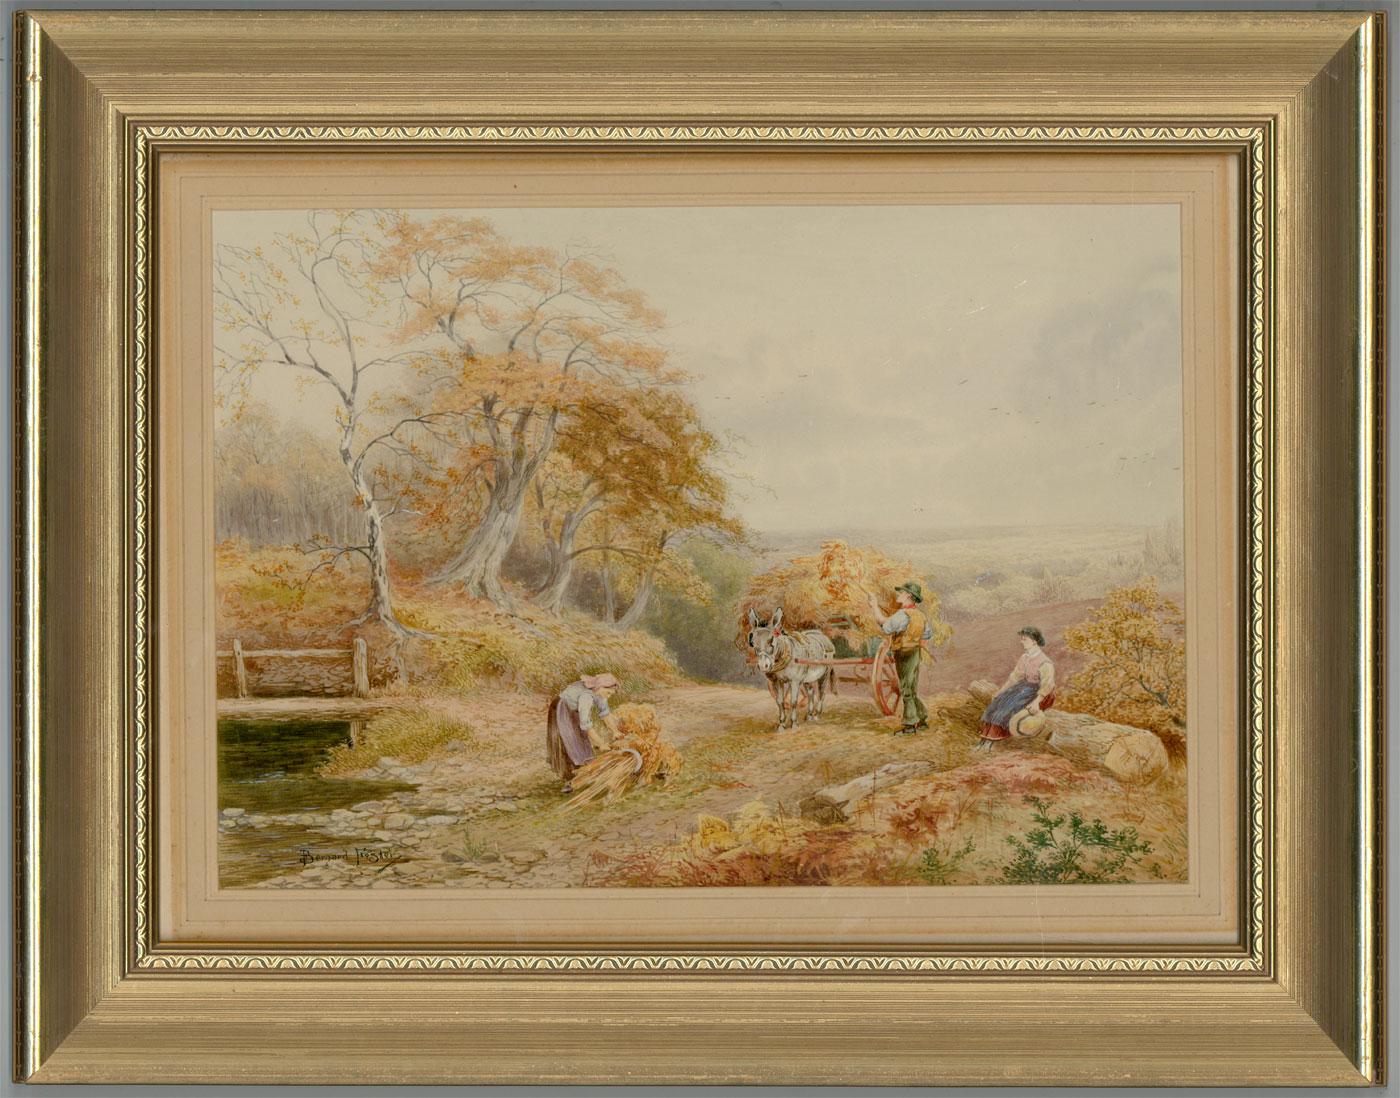 Unknown Landscape Art - Bernard Foster - Signed 19th Century Watercolour, Harvesters in a Landscape